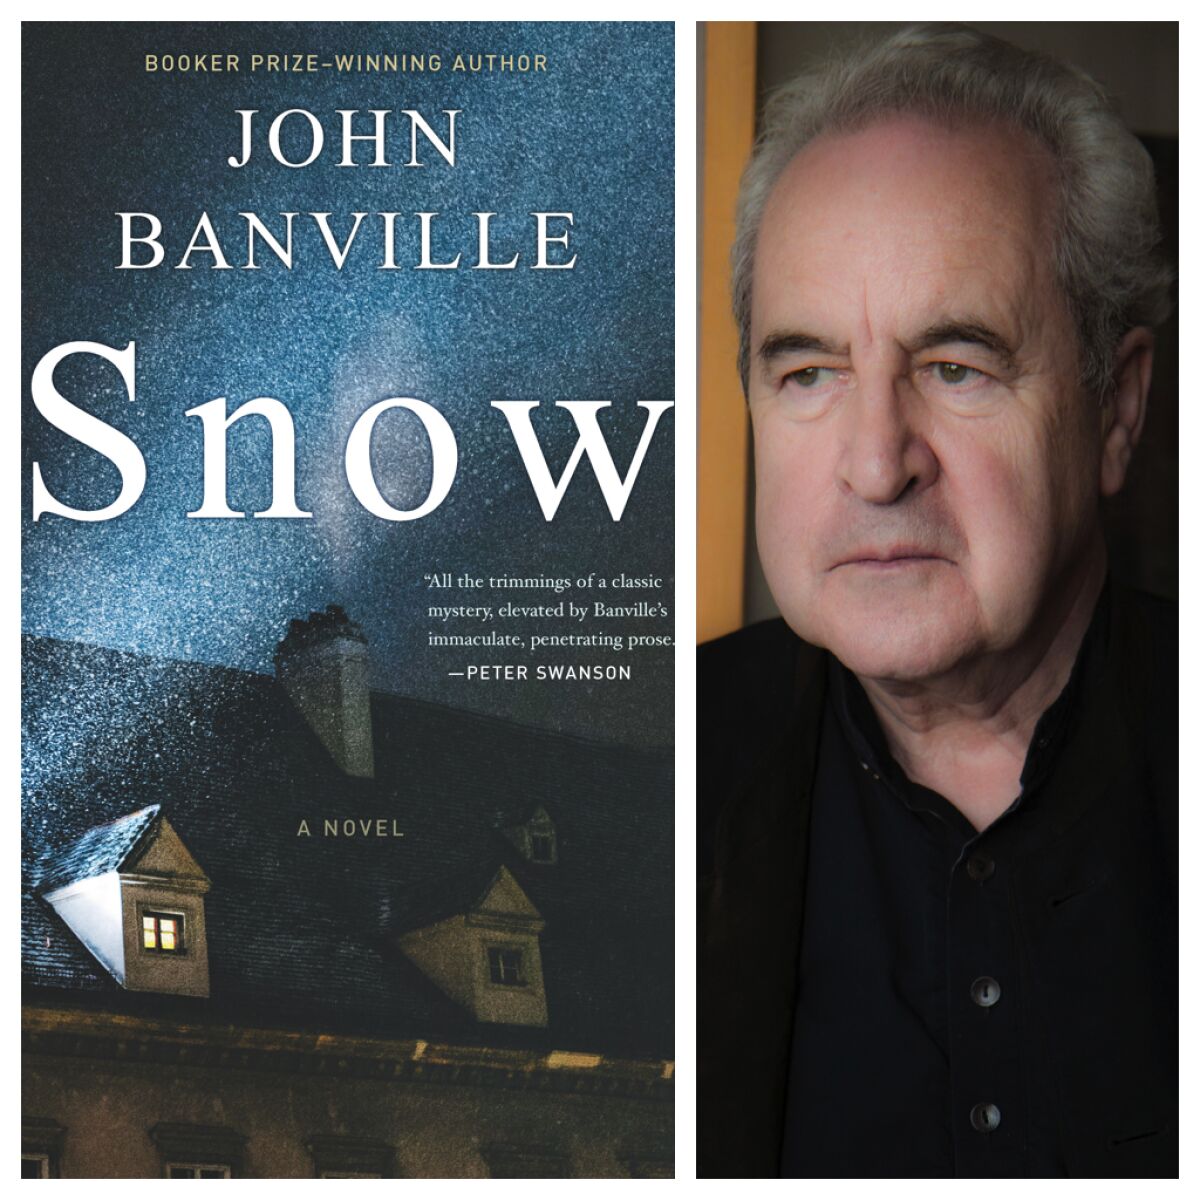 John Banville's new novel is "Snow."